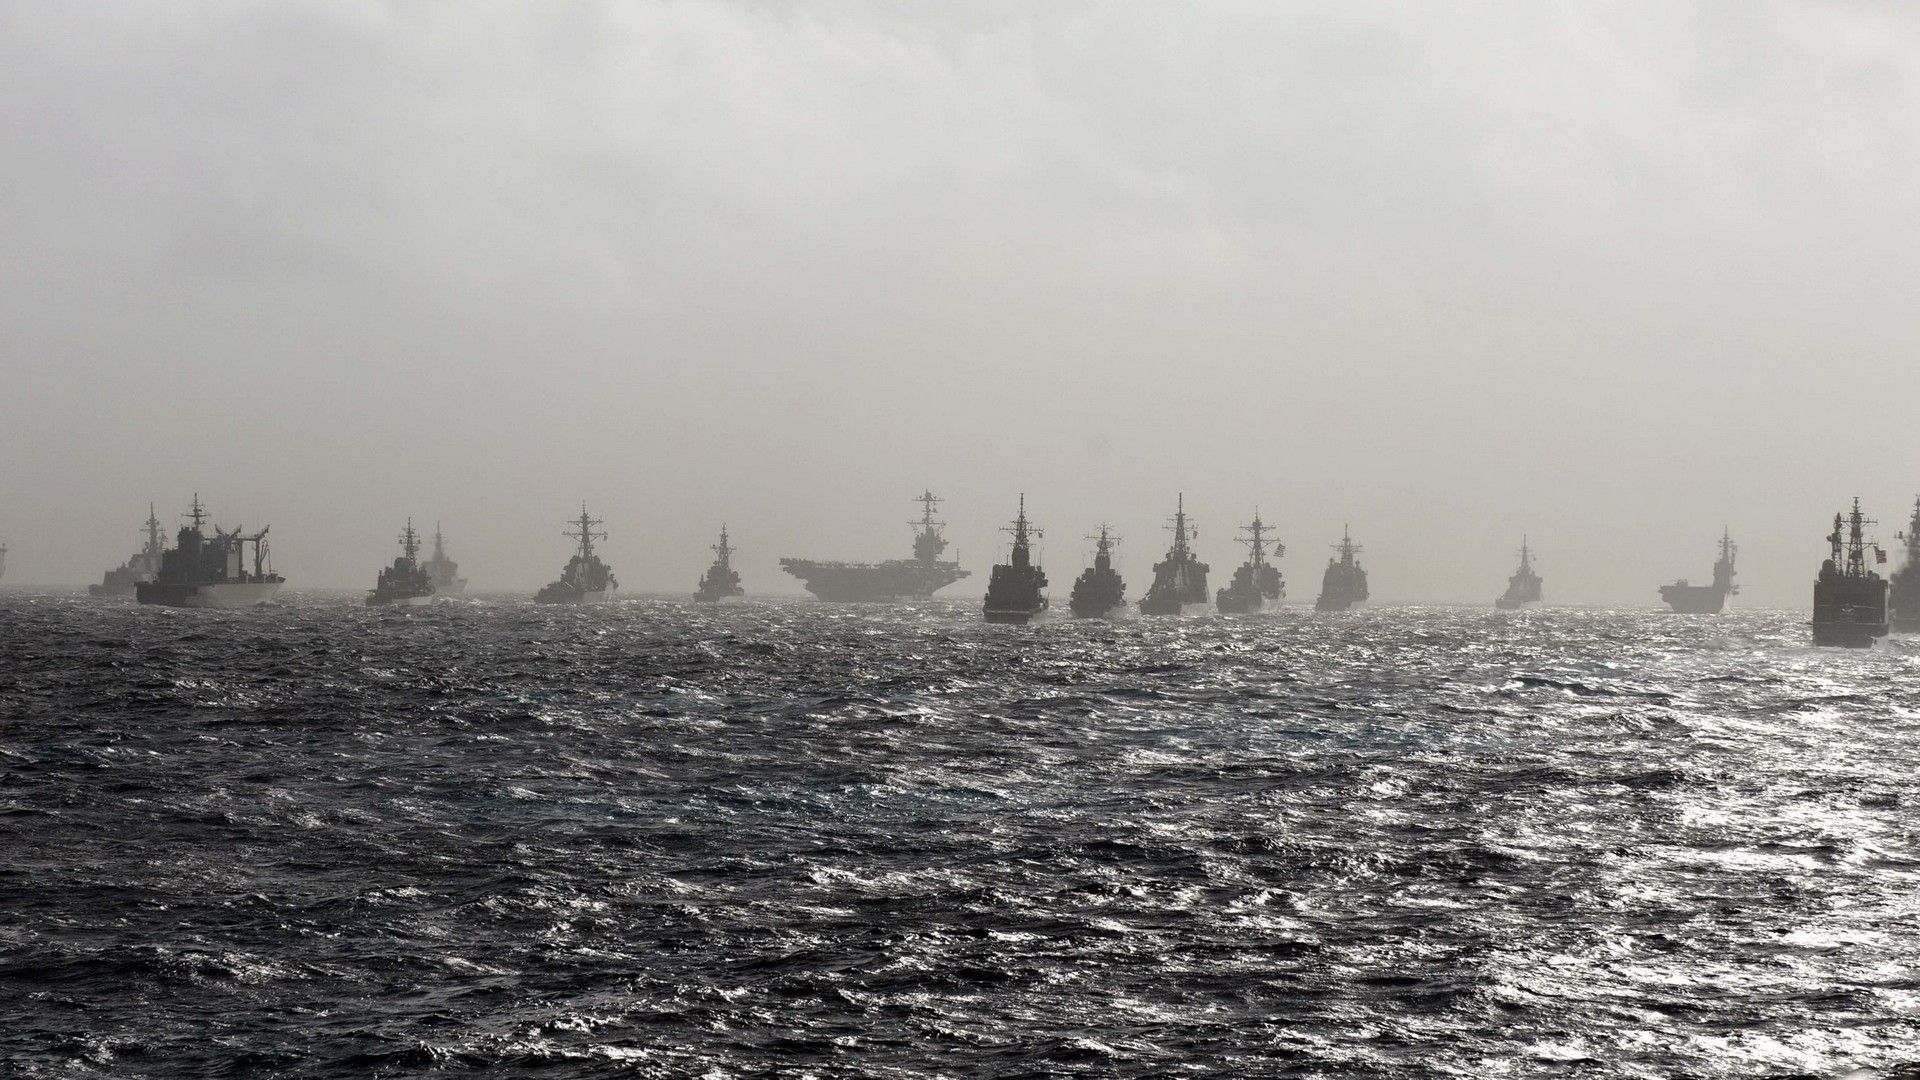 Navy Ships HD Wallpapers | Navy Ships Photos | Cool Wallpapers